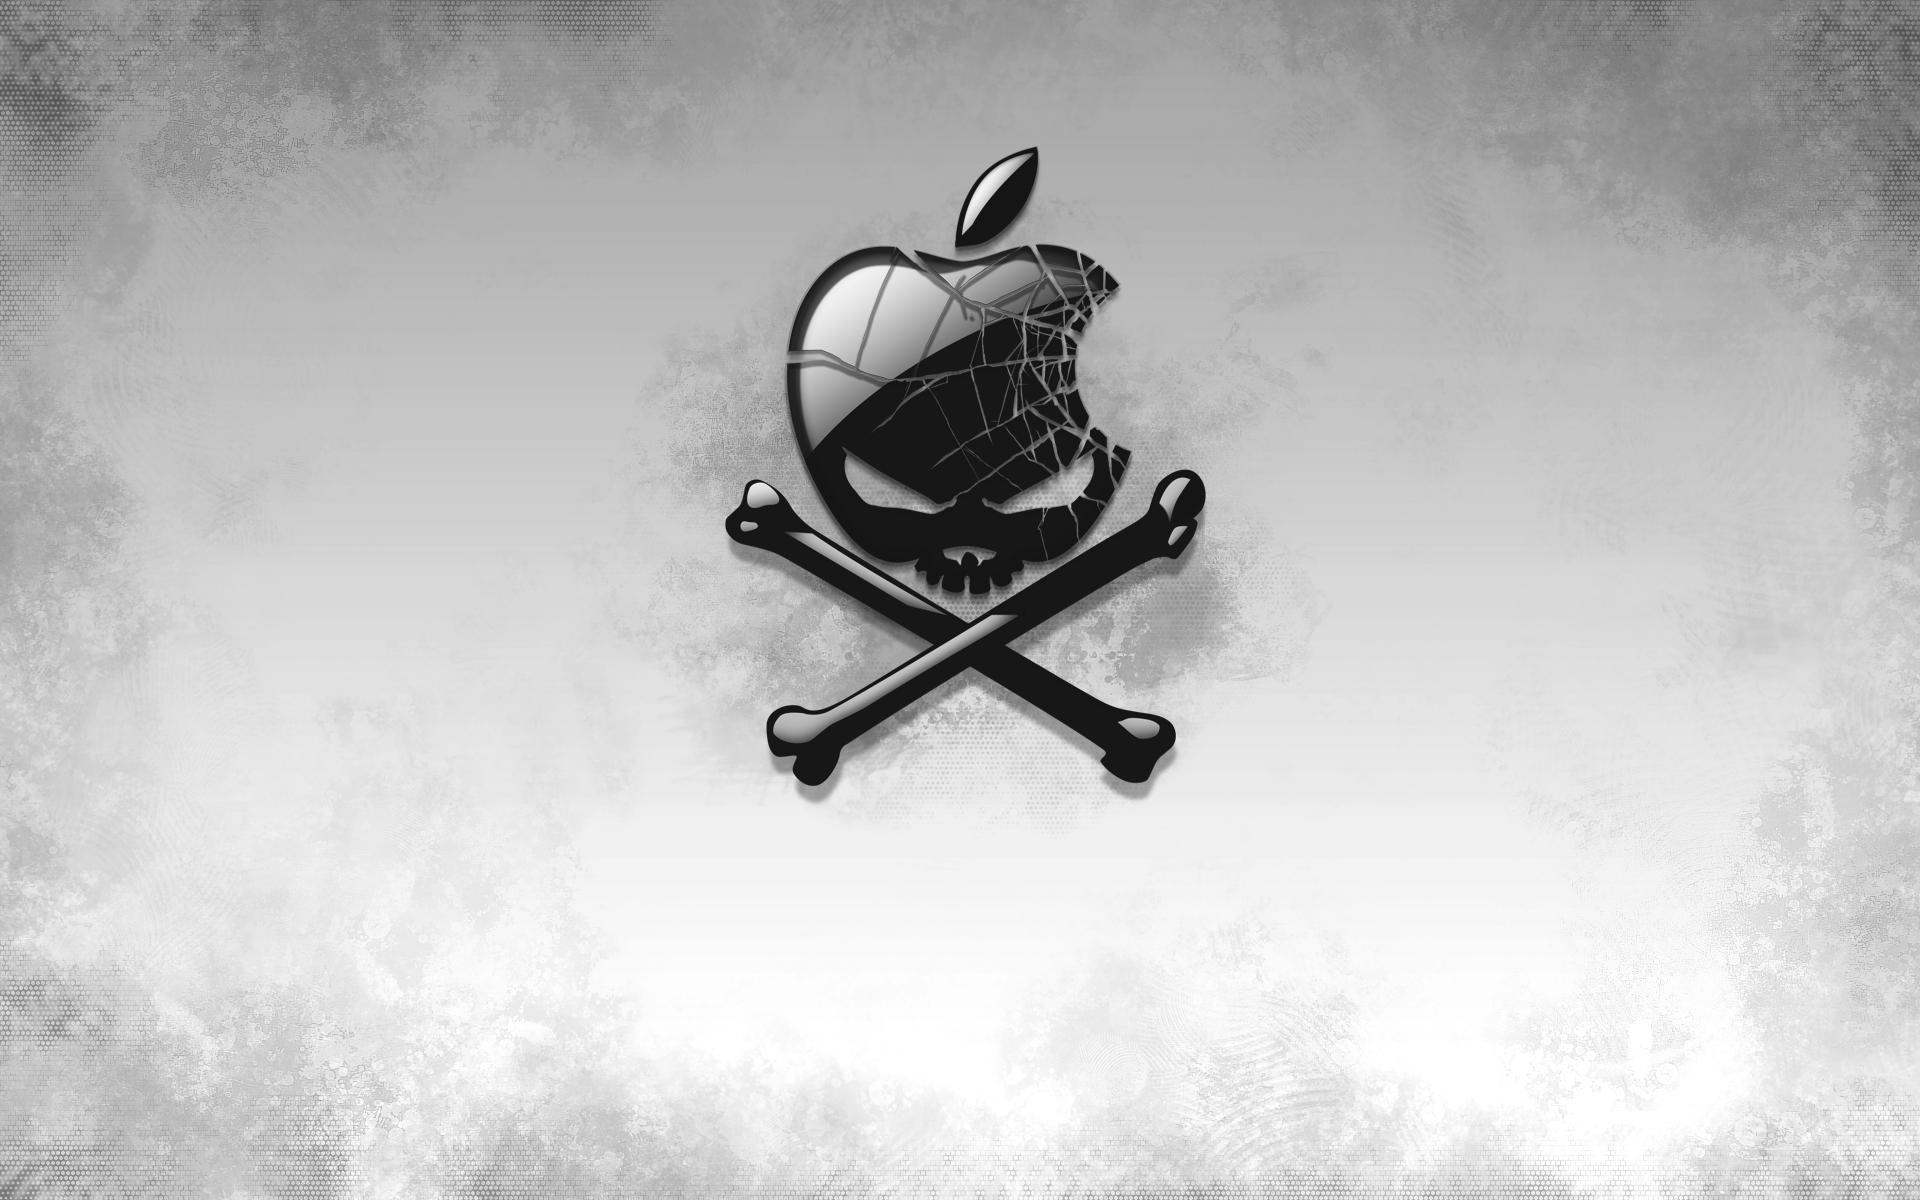 Apple IMac Wallpaper. PHOTO